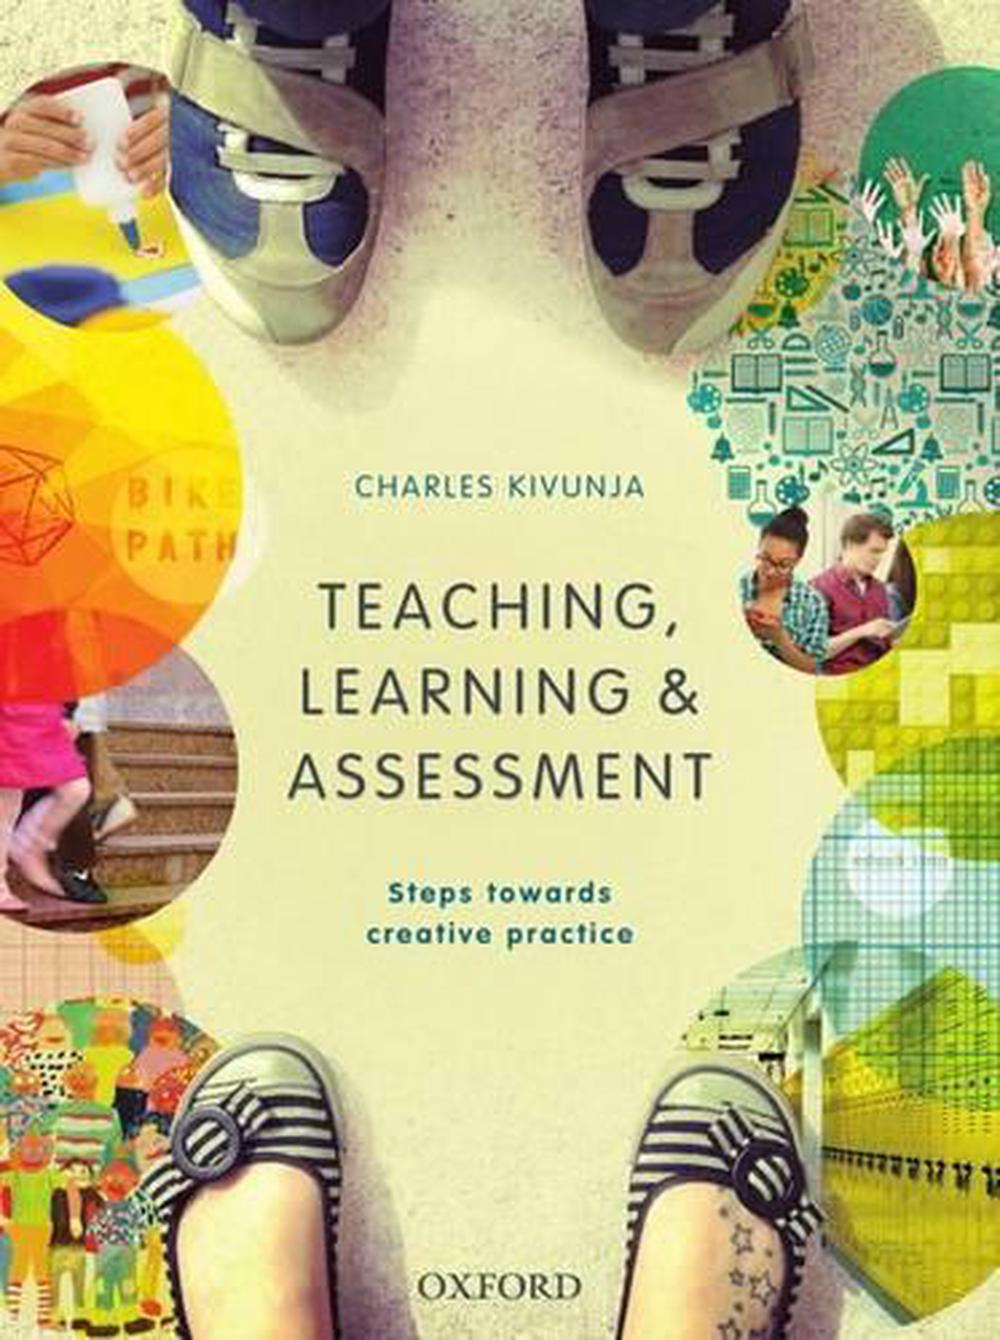 books on assessment in education